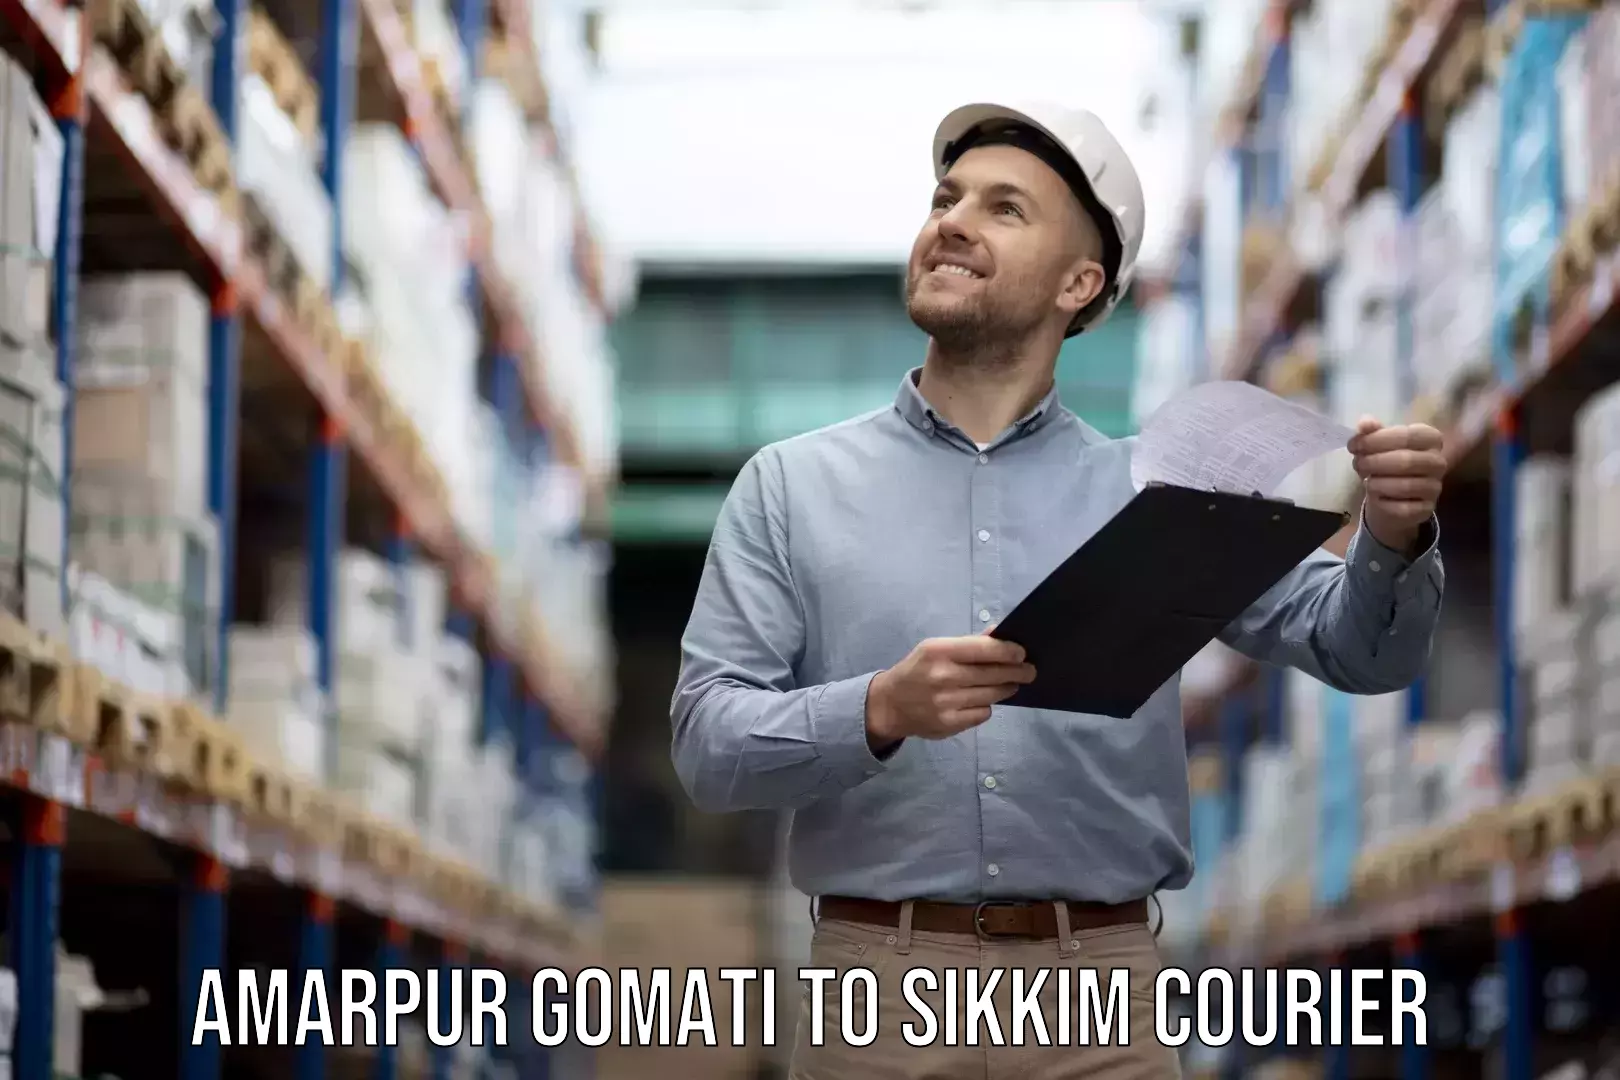 Professional moving company Amarpur Gomati to North Sikkim